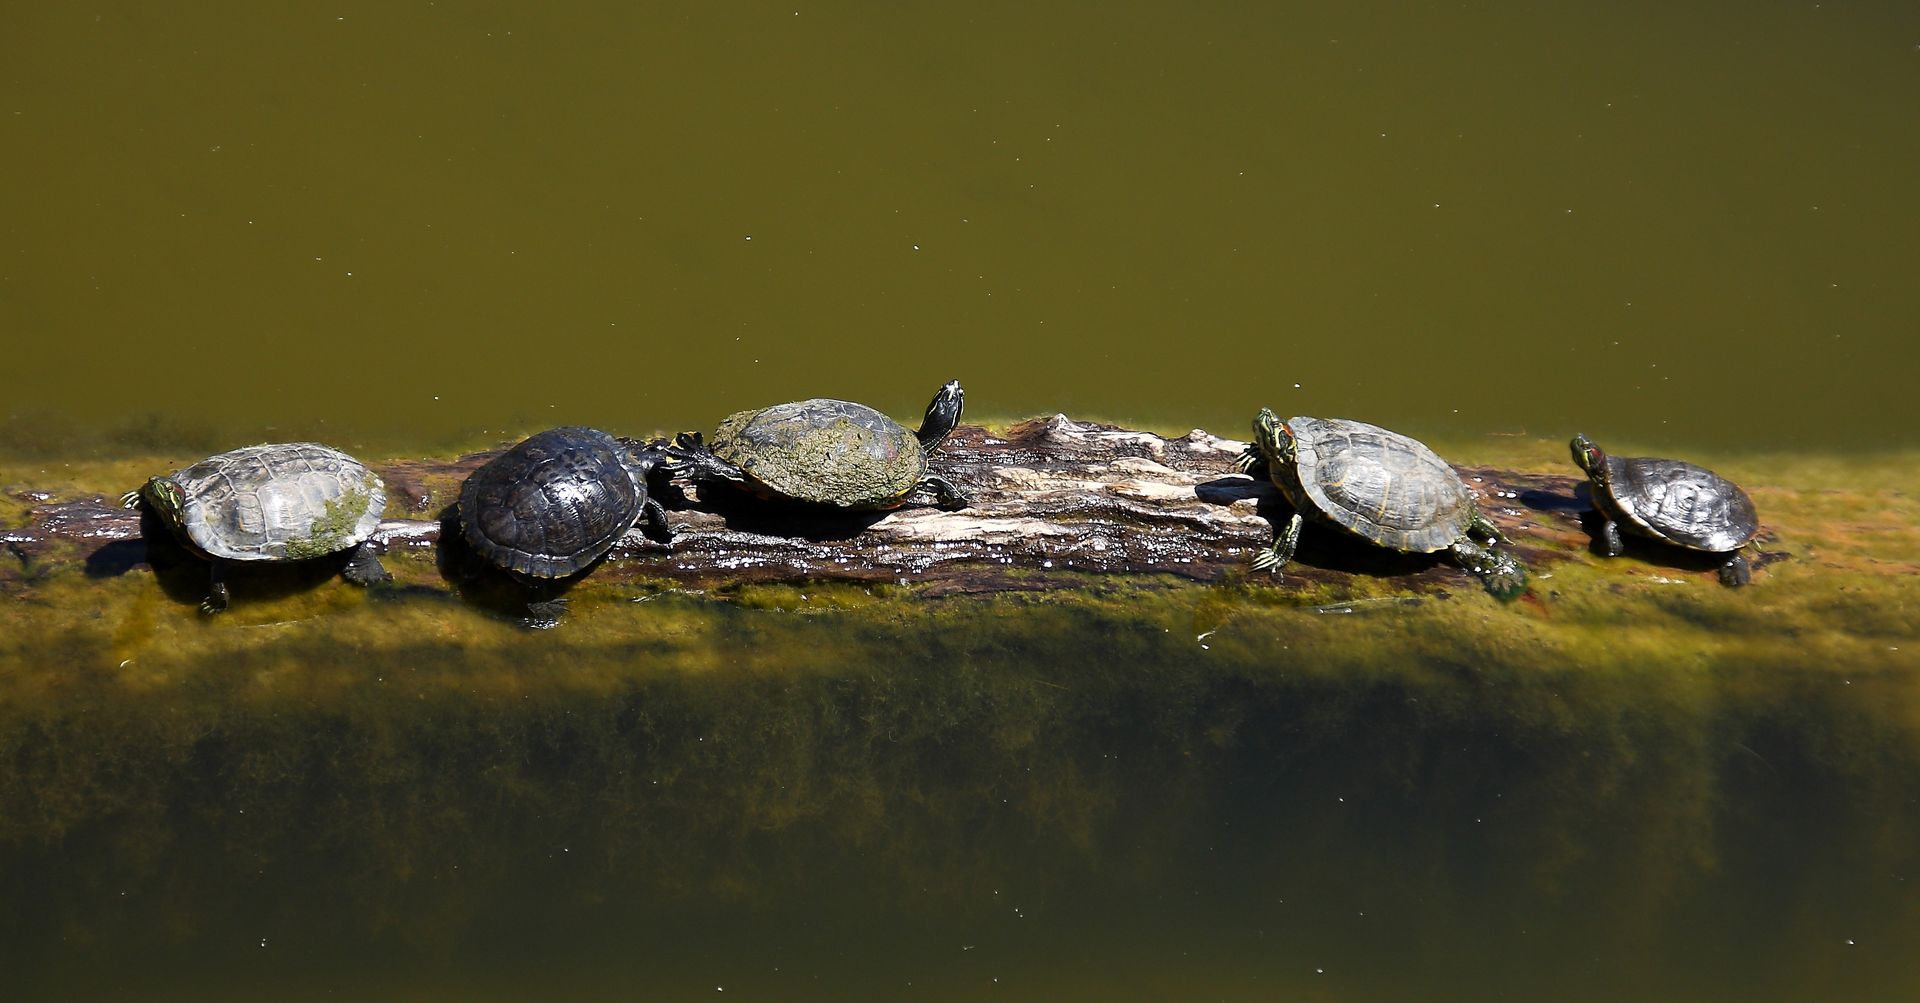 Five turtles sit together on a log.